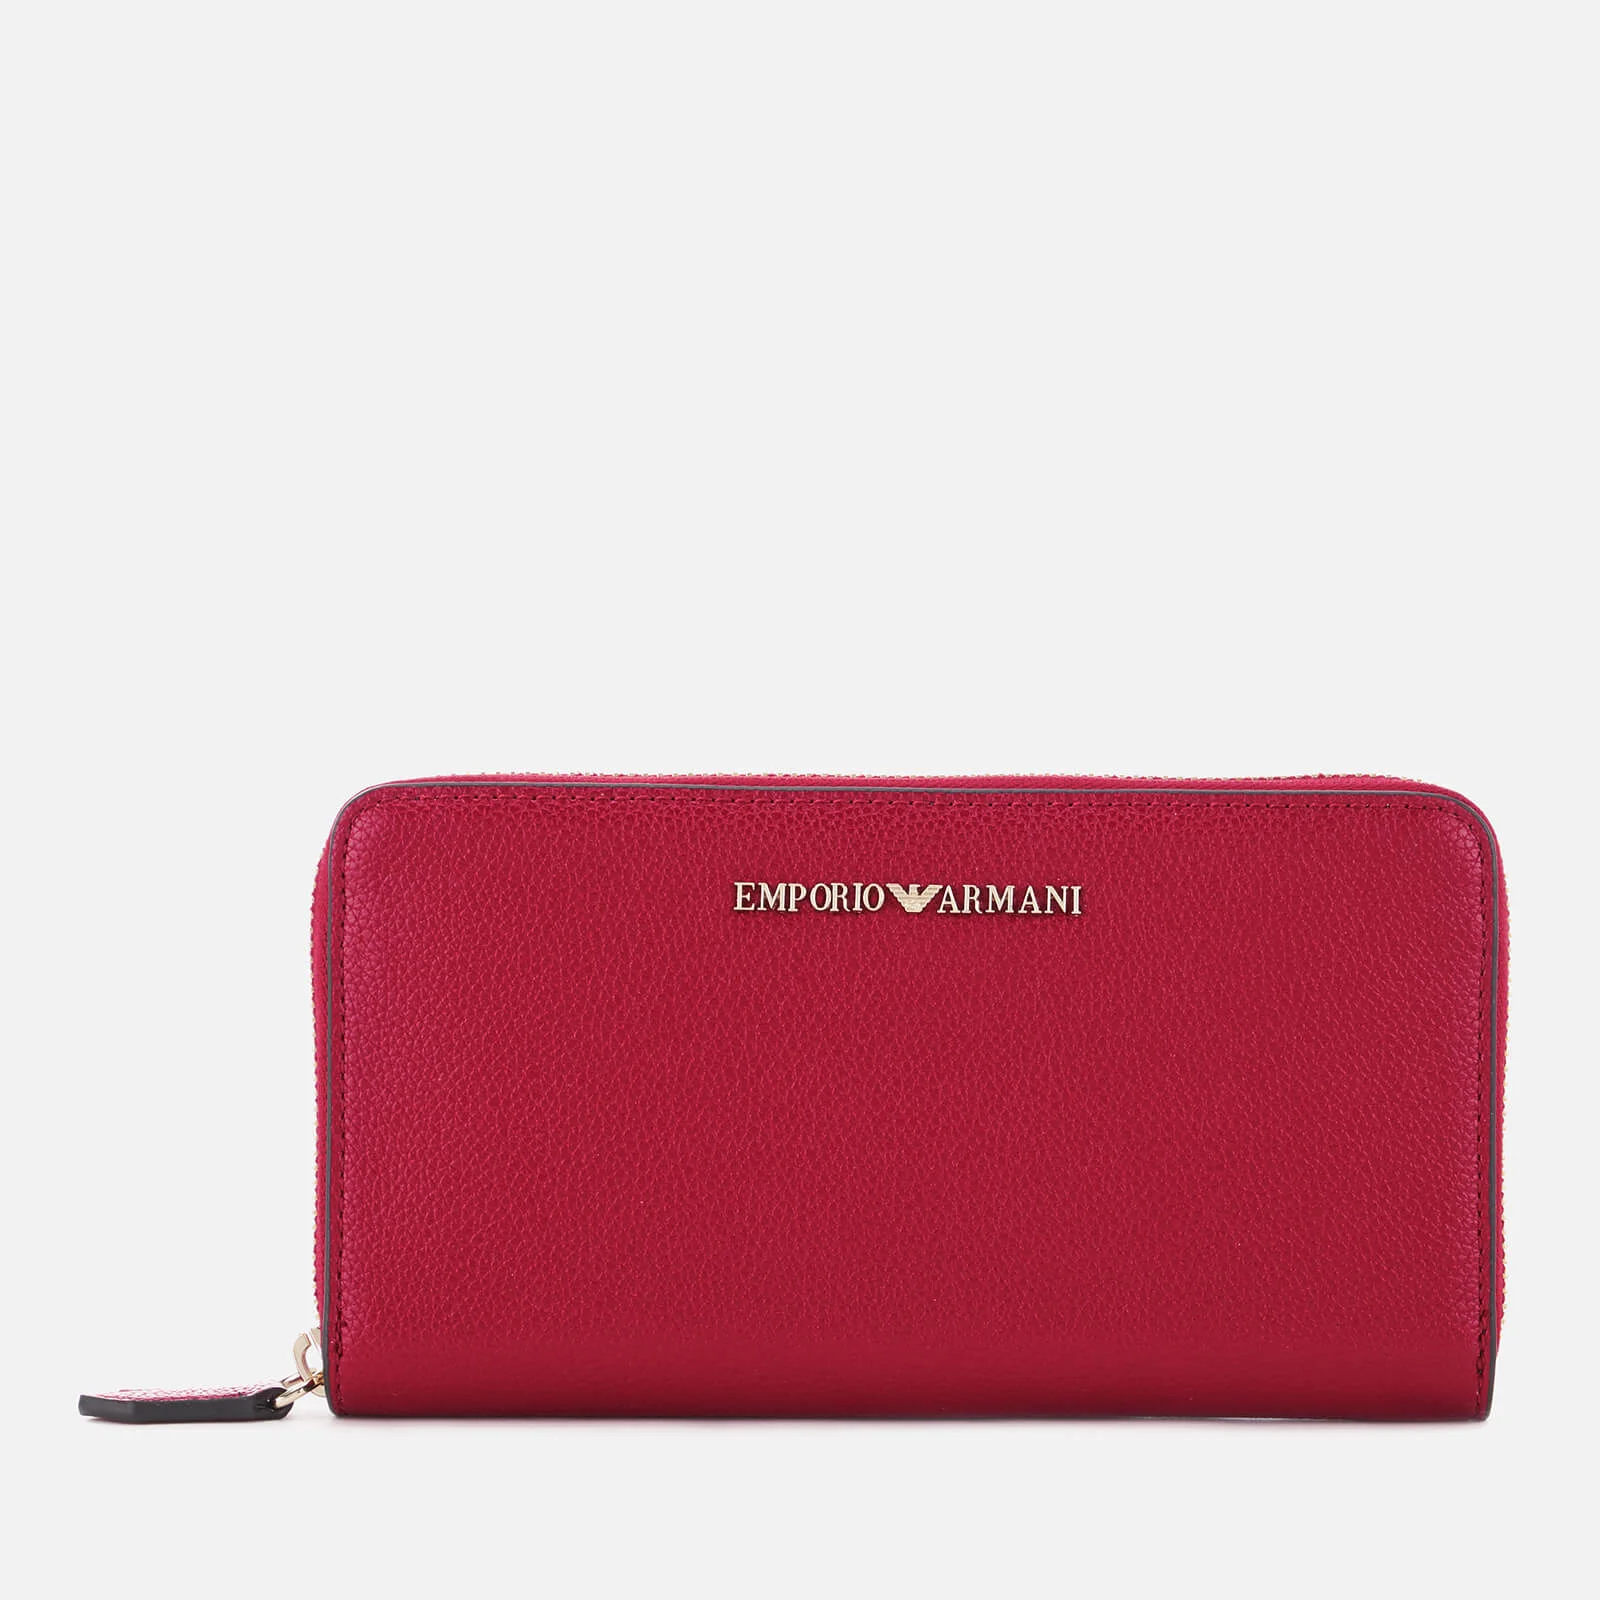 Emporio Armani Women's Zip Around Wallet - Red Image 1